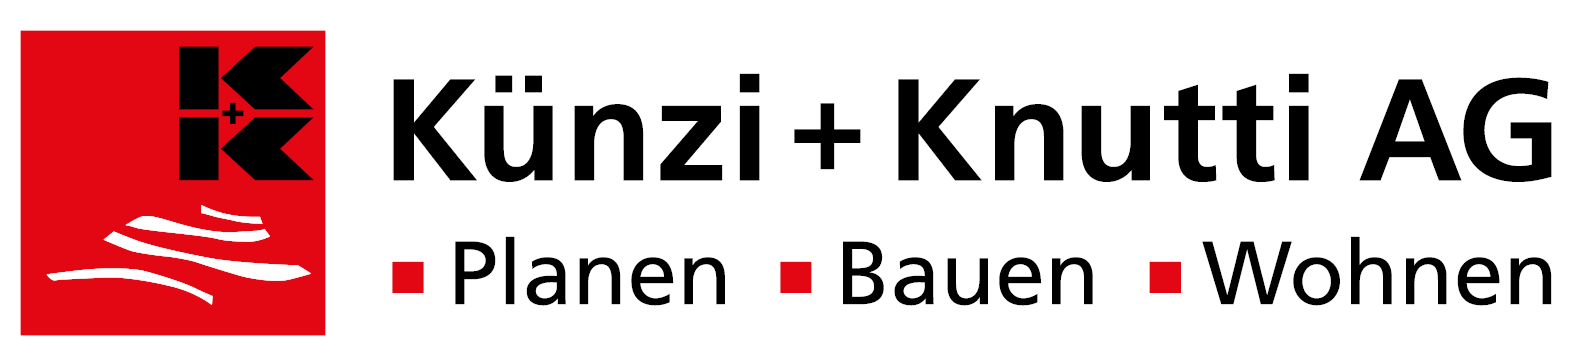 Künzi+Knutti AG